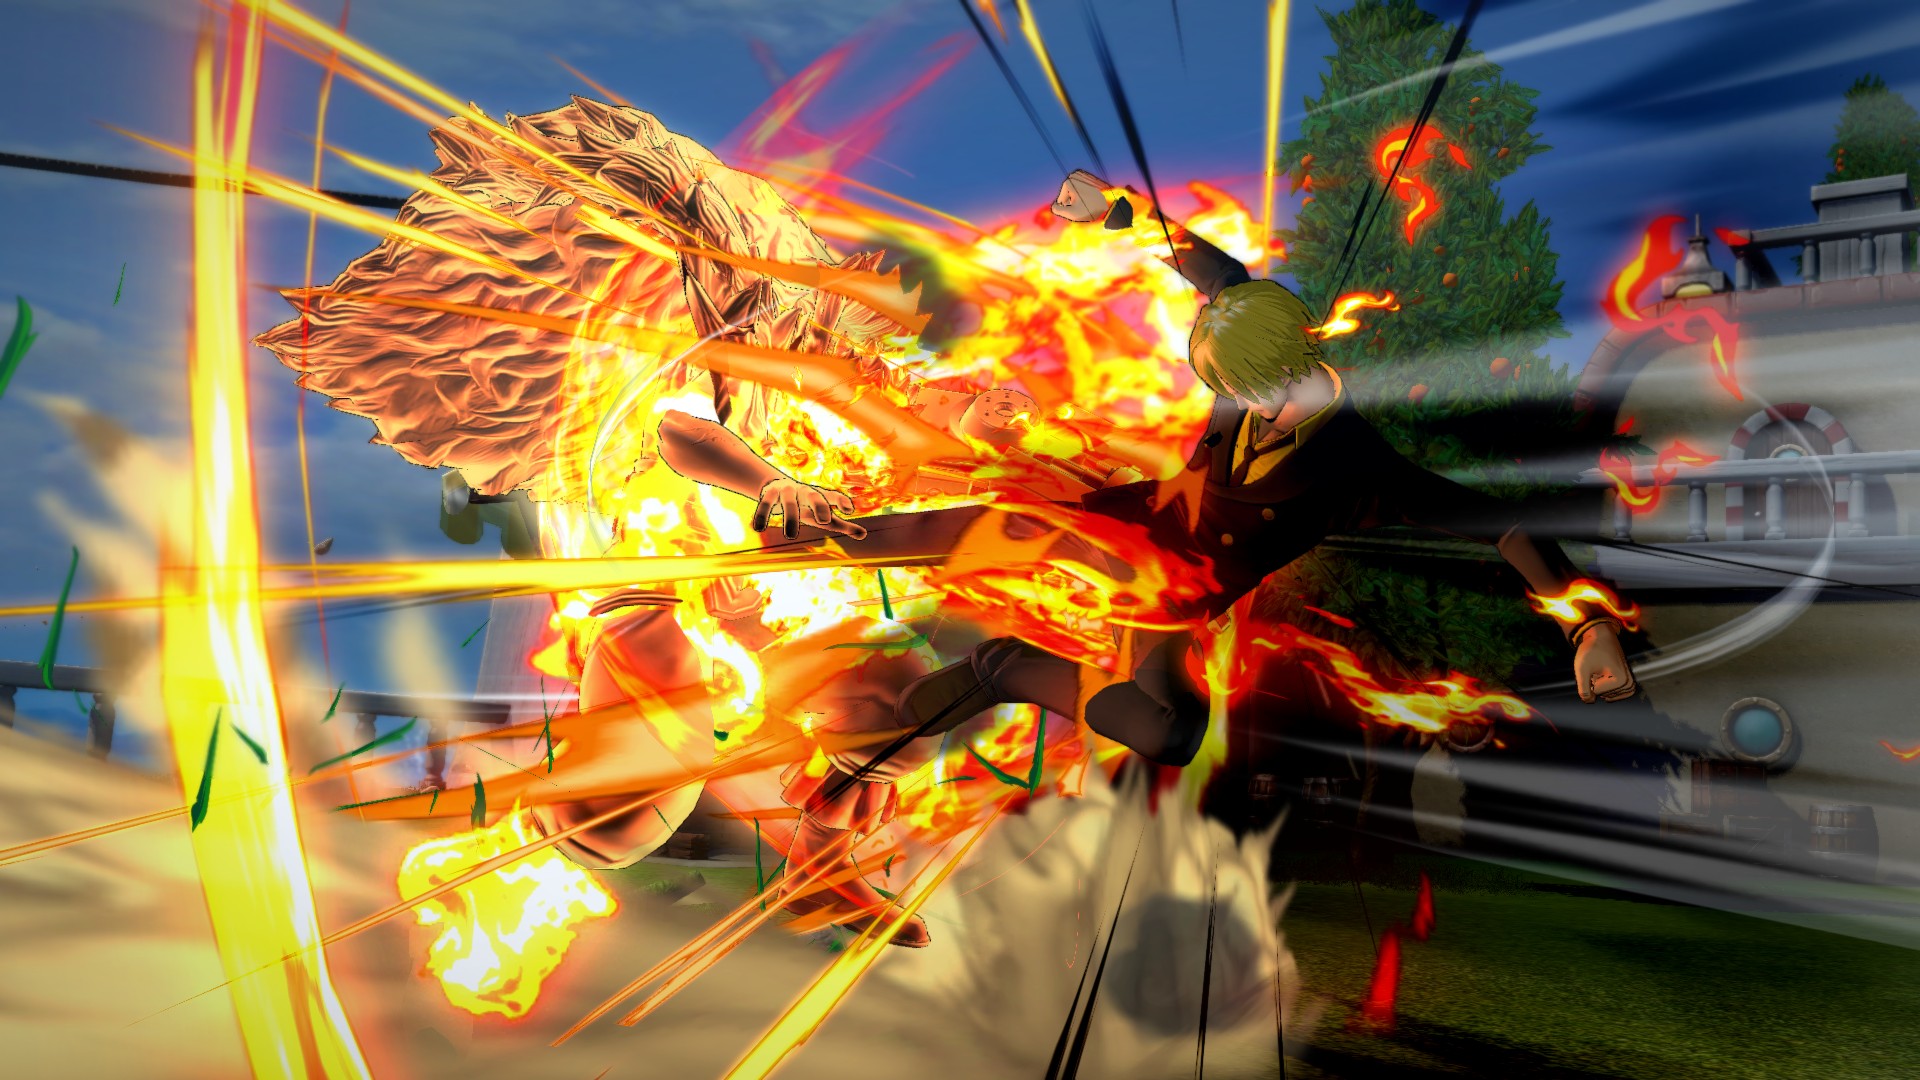 One Piece: Burning Blood - Xbox One / XS - Mídia Digital - NeedGames